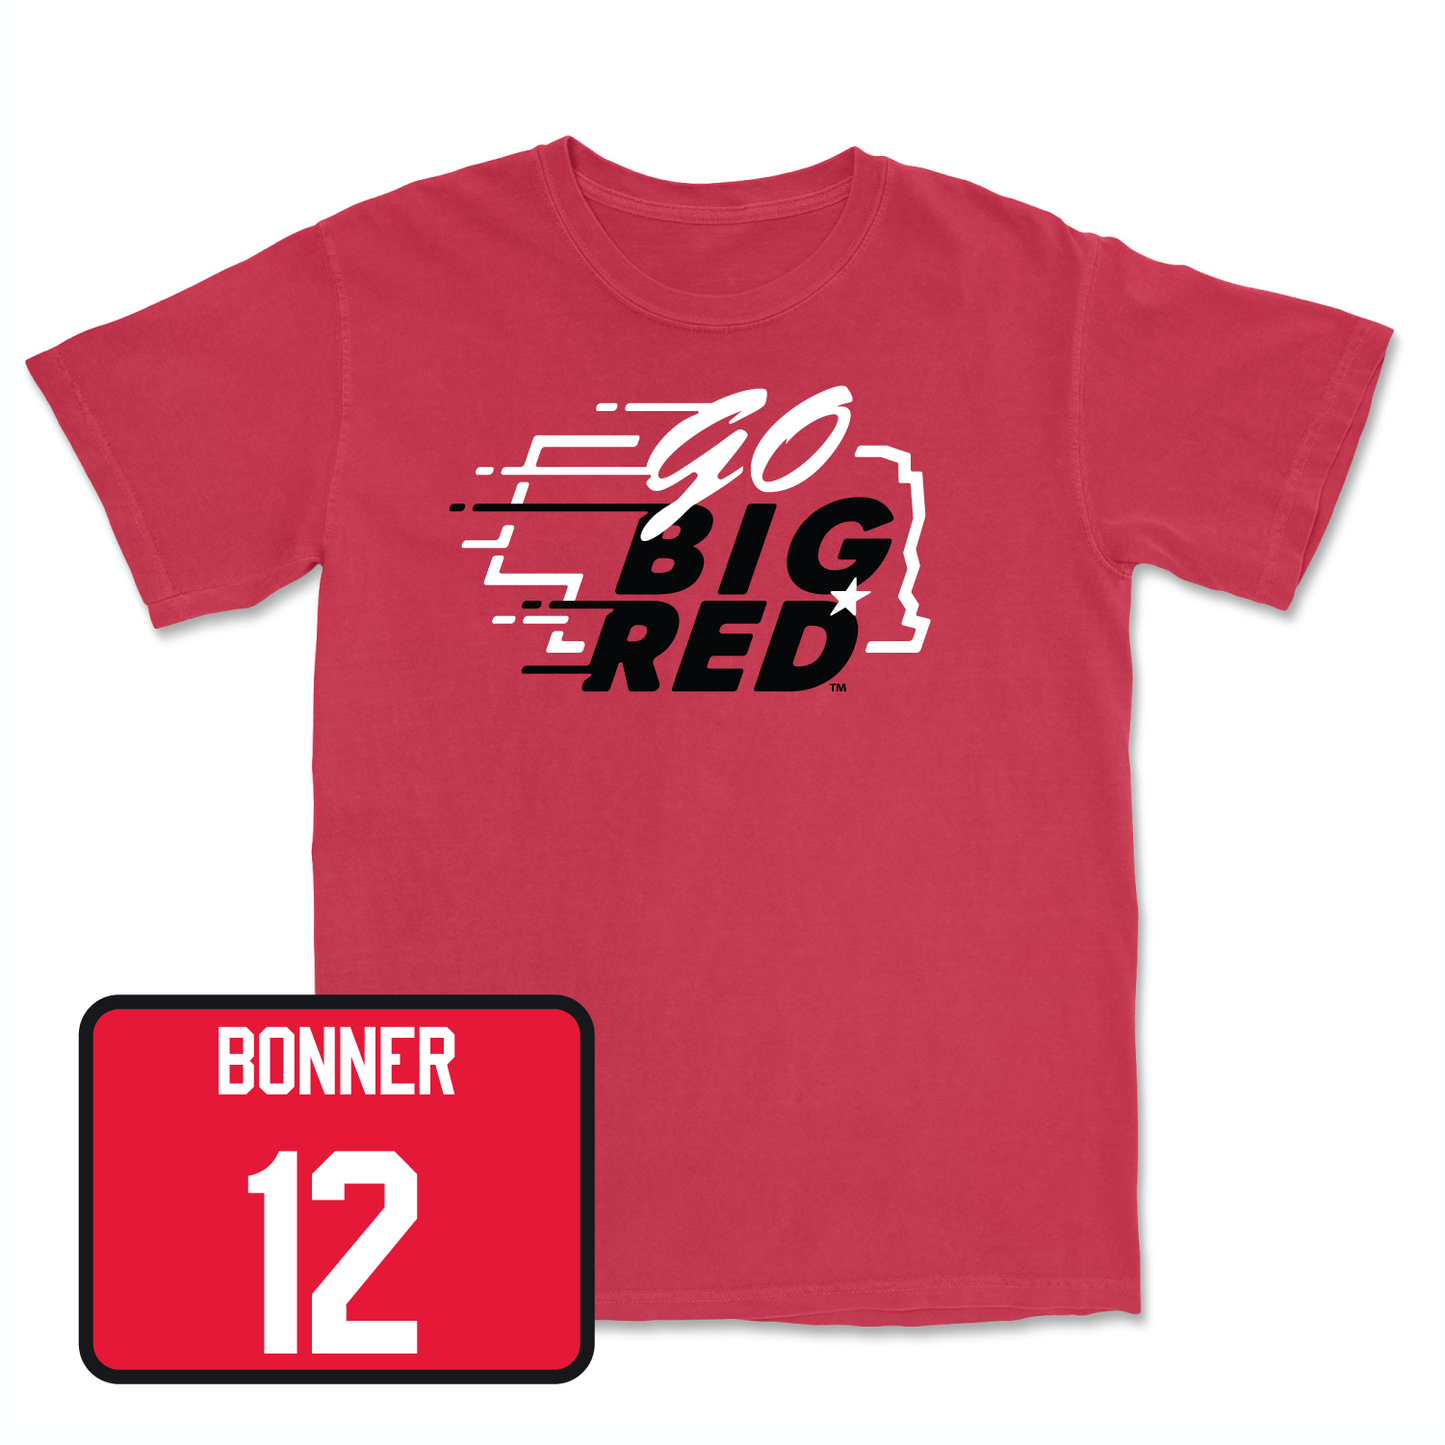 Red Football GBR Tee 2 4X-Large / Janiran Bonner | #12